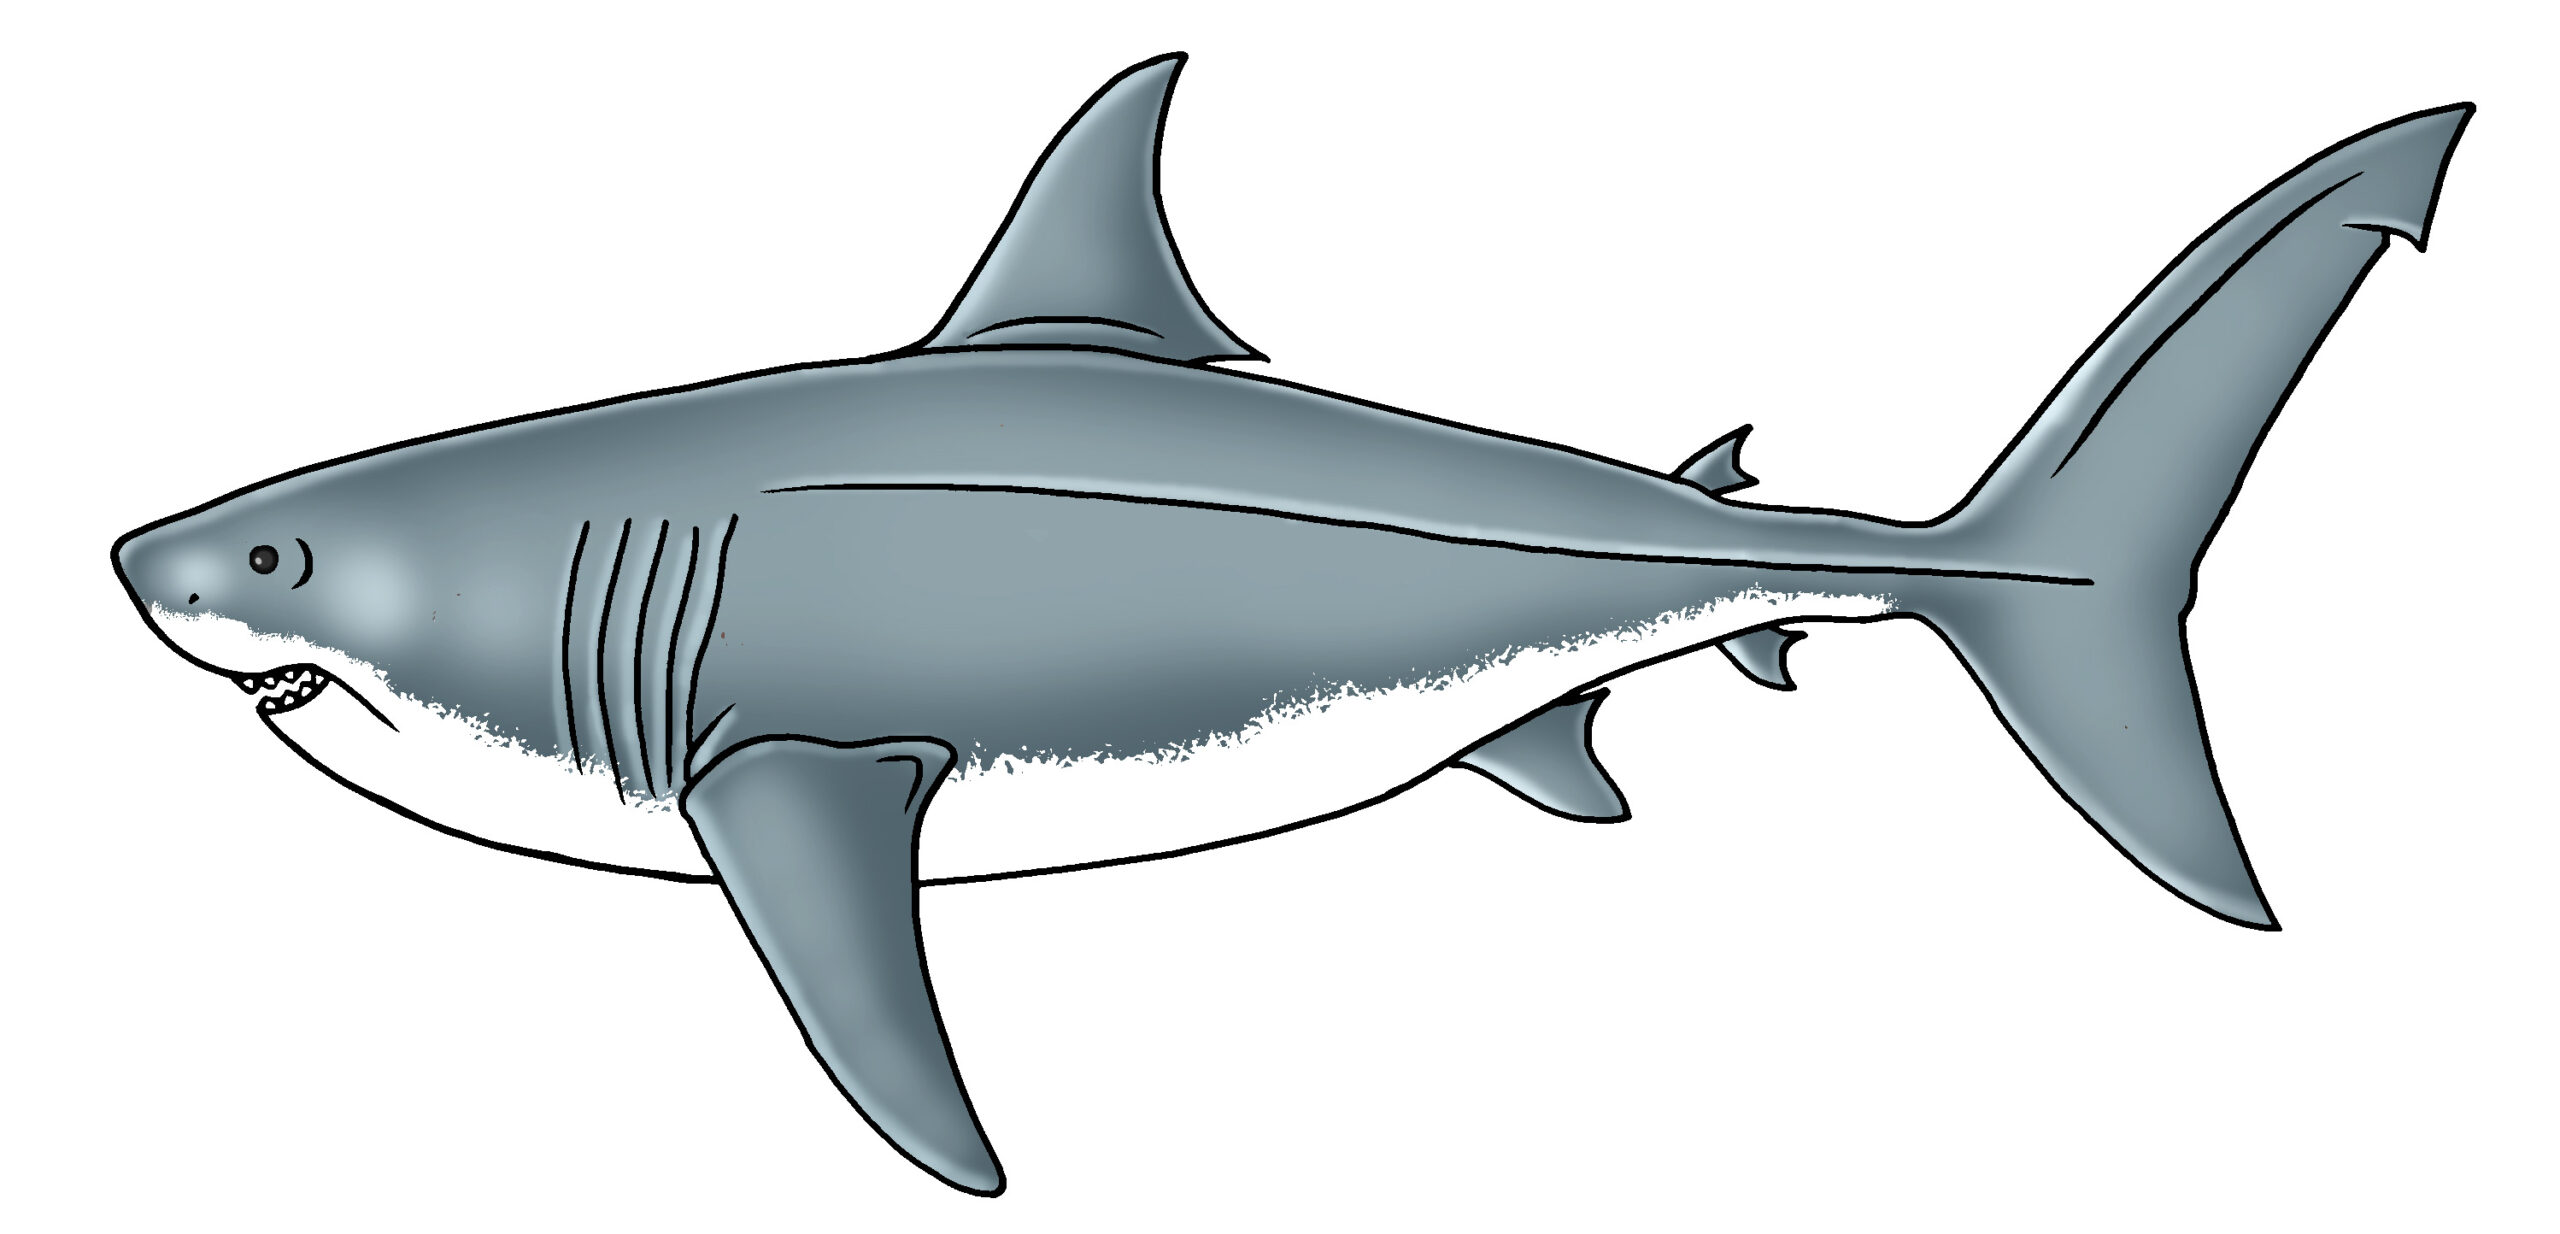 Shark drawing clipart